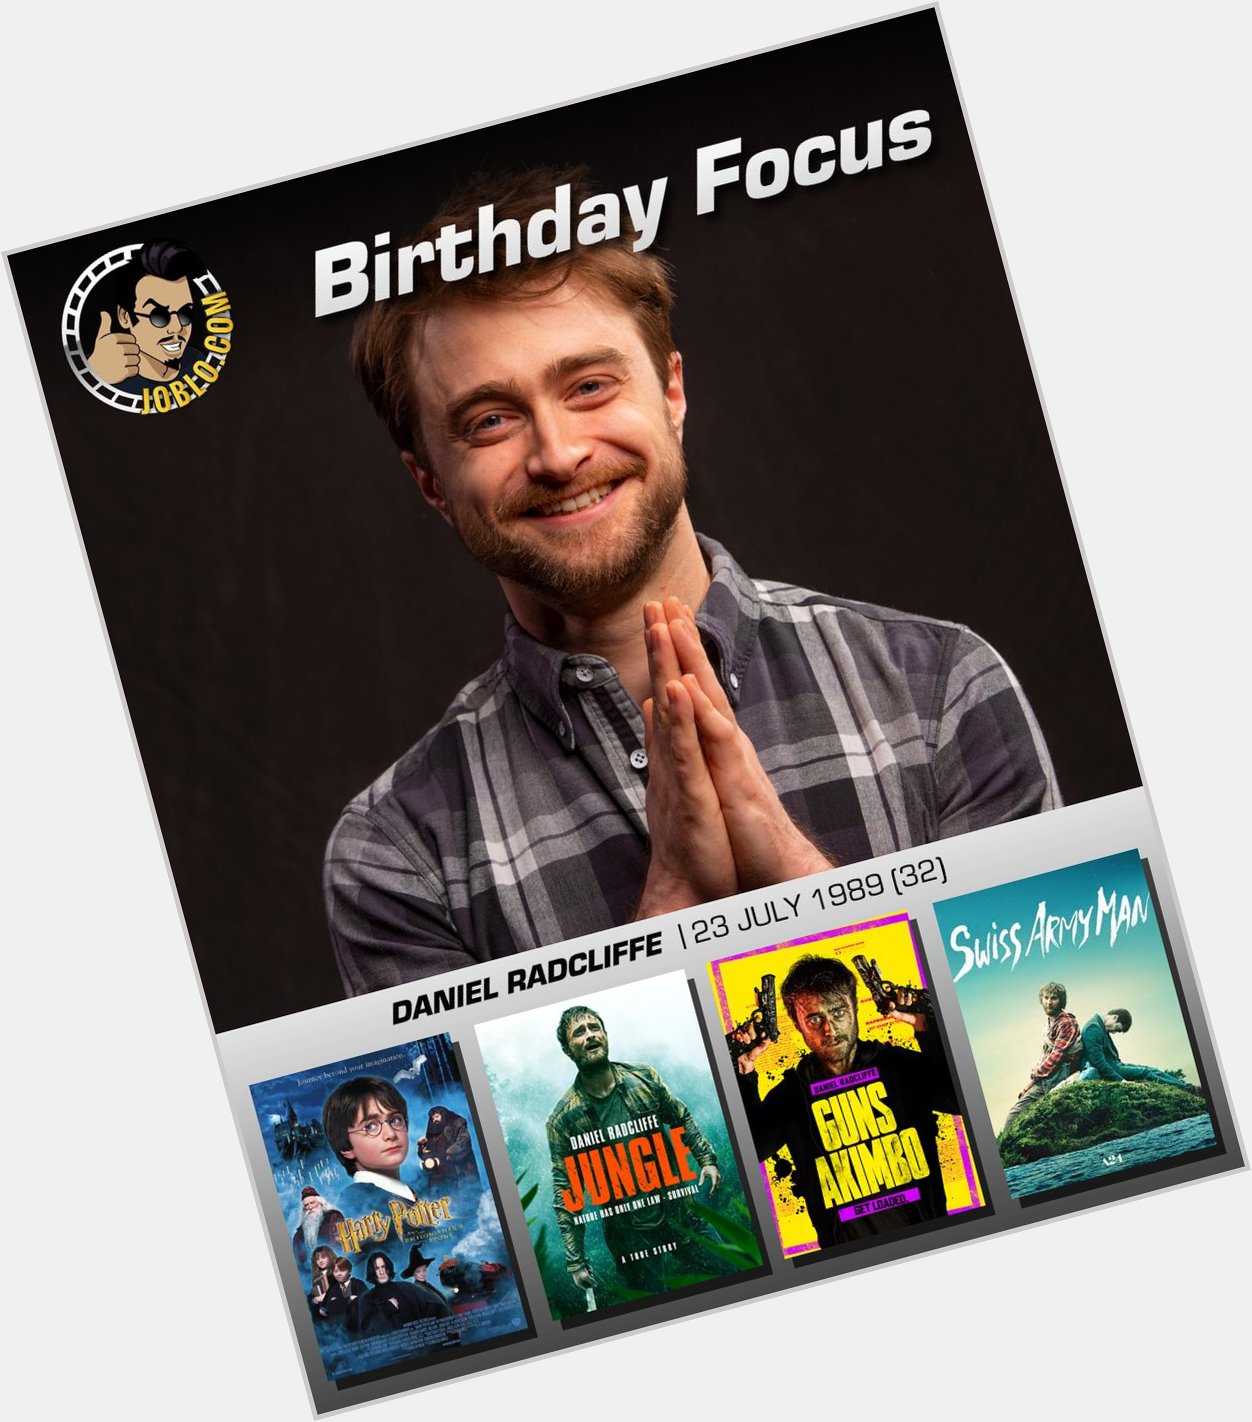 Wishing Daniel Radcliffe a very happy 32nd birthday! 